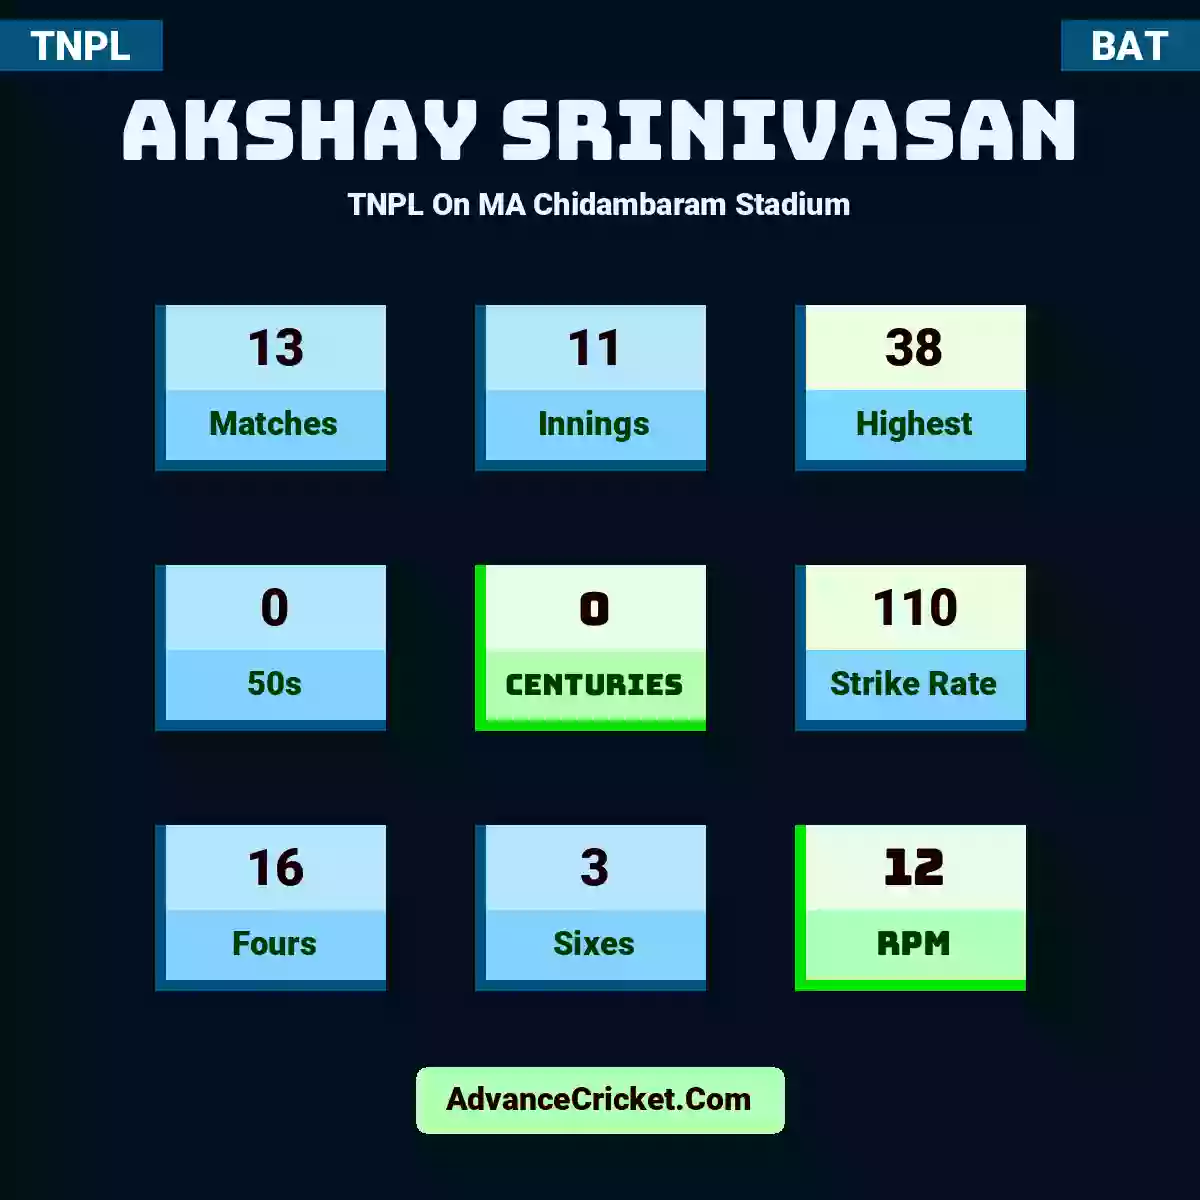 Akshay Srinivasan TNPL  On MA Chidambaram Stadium, Akshay Srinivasan played 13 matches, scored 38 runs as highest, 0 half-centuries, and 0 centuries, with a strike rate of 110. A.Srinivasan hit 16 fours and 3 sixes, with an RPM of 12.